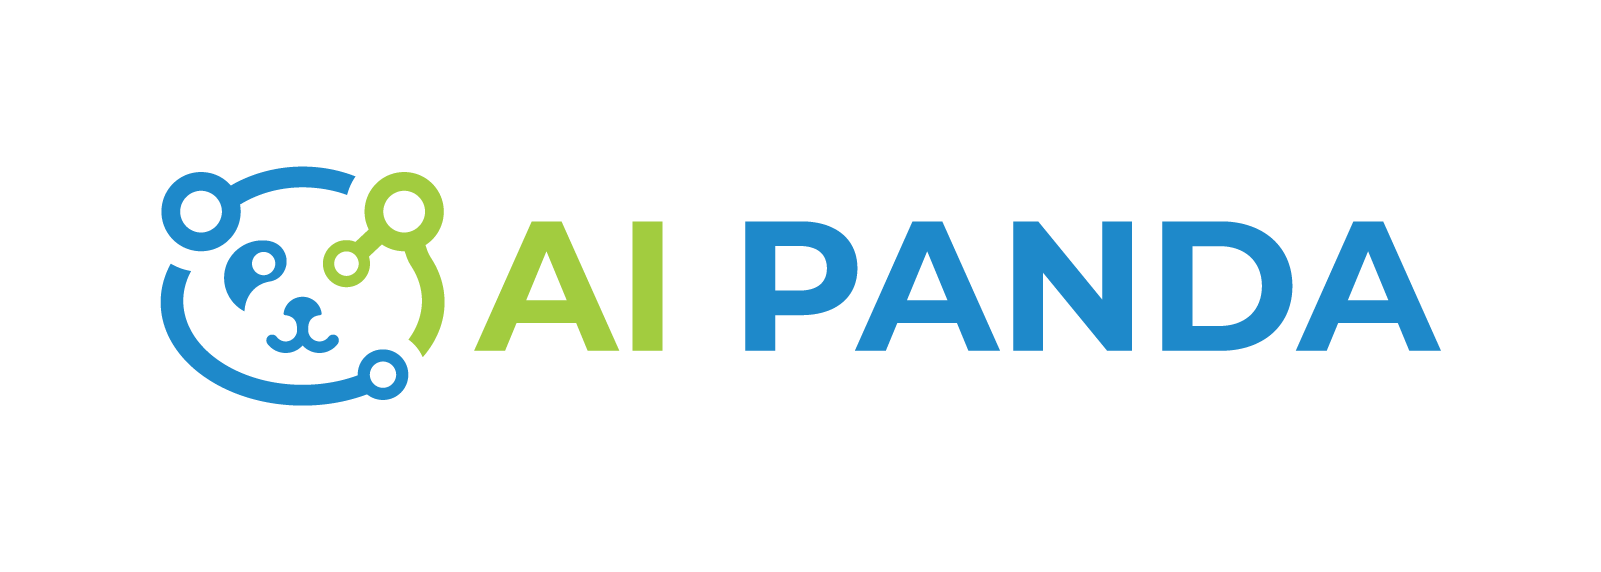 AI Panda logo